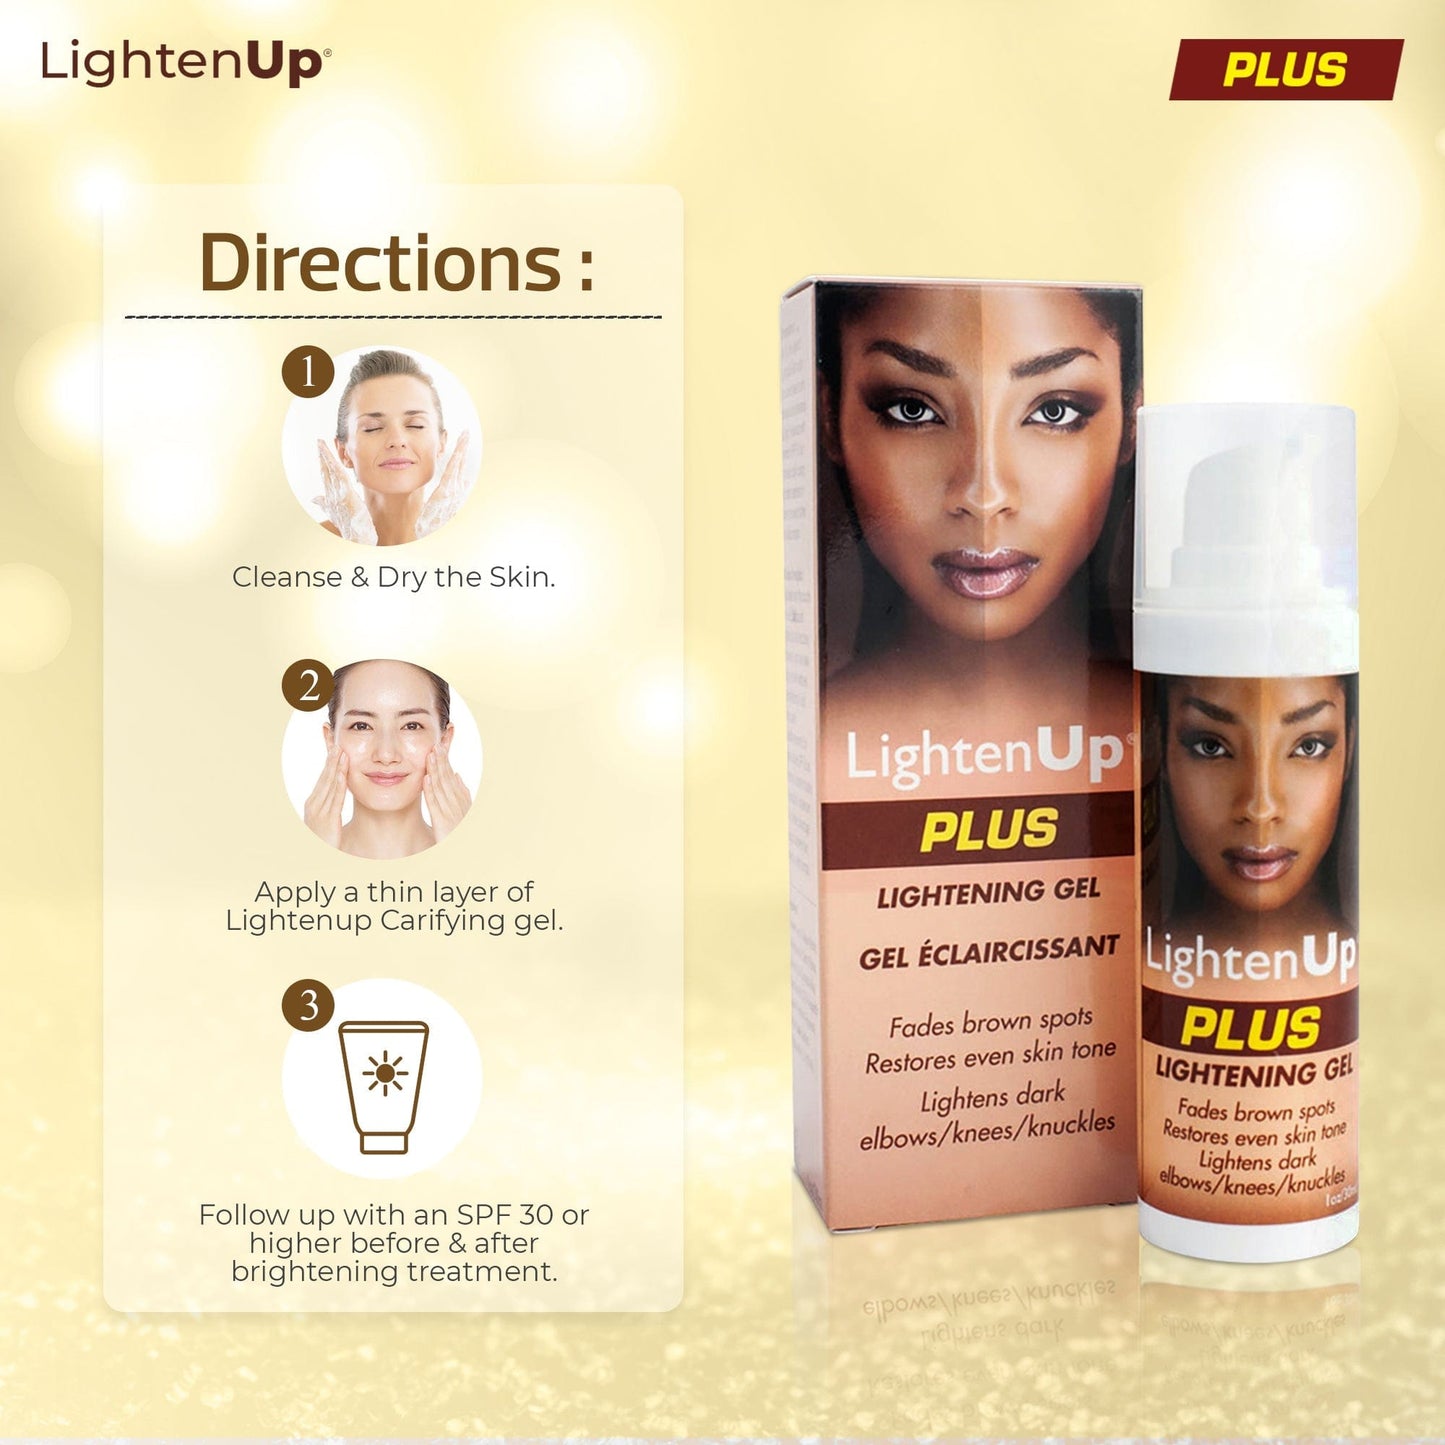 Omic LightenUp PLUS Lightening Gel - 30ml LightenUp - Mitchell Brands - Skin Lightening, Skin Brightening, Fade Dark Spots, Shea Butter, Hair Growth Products